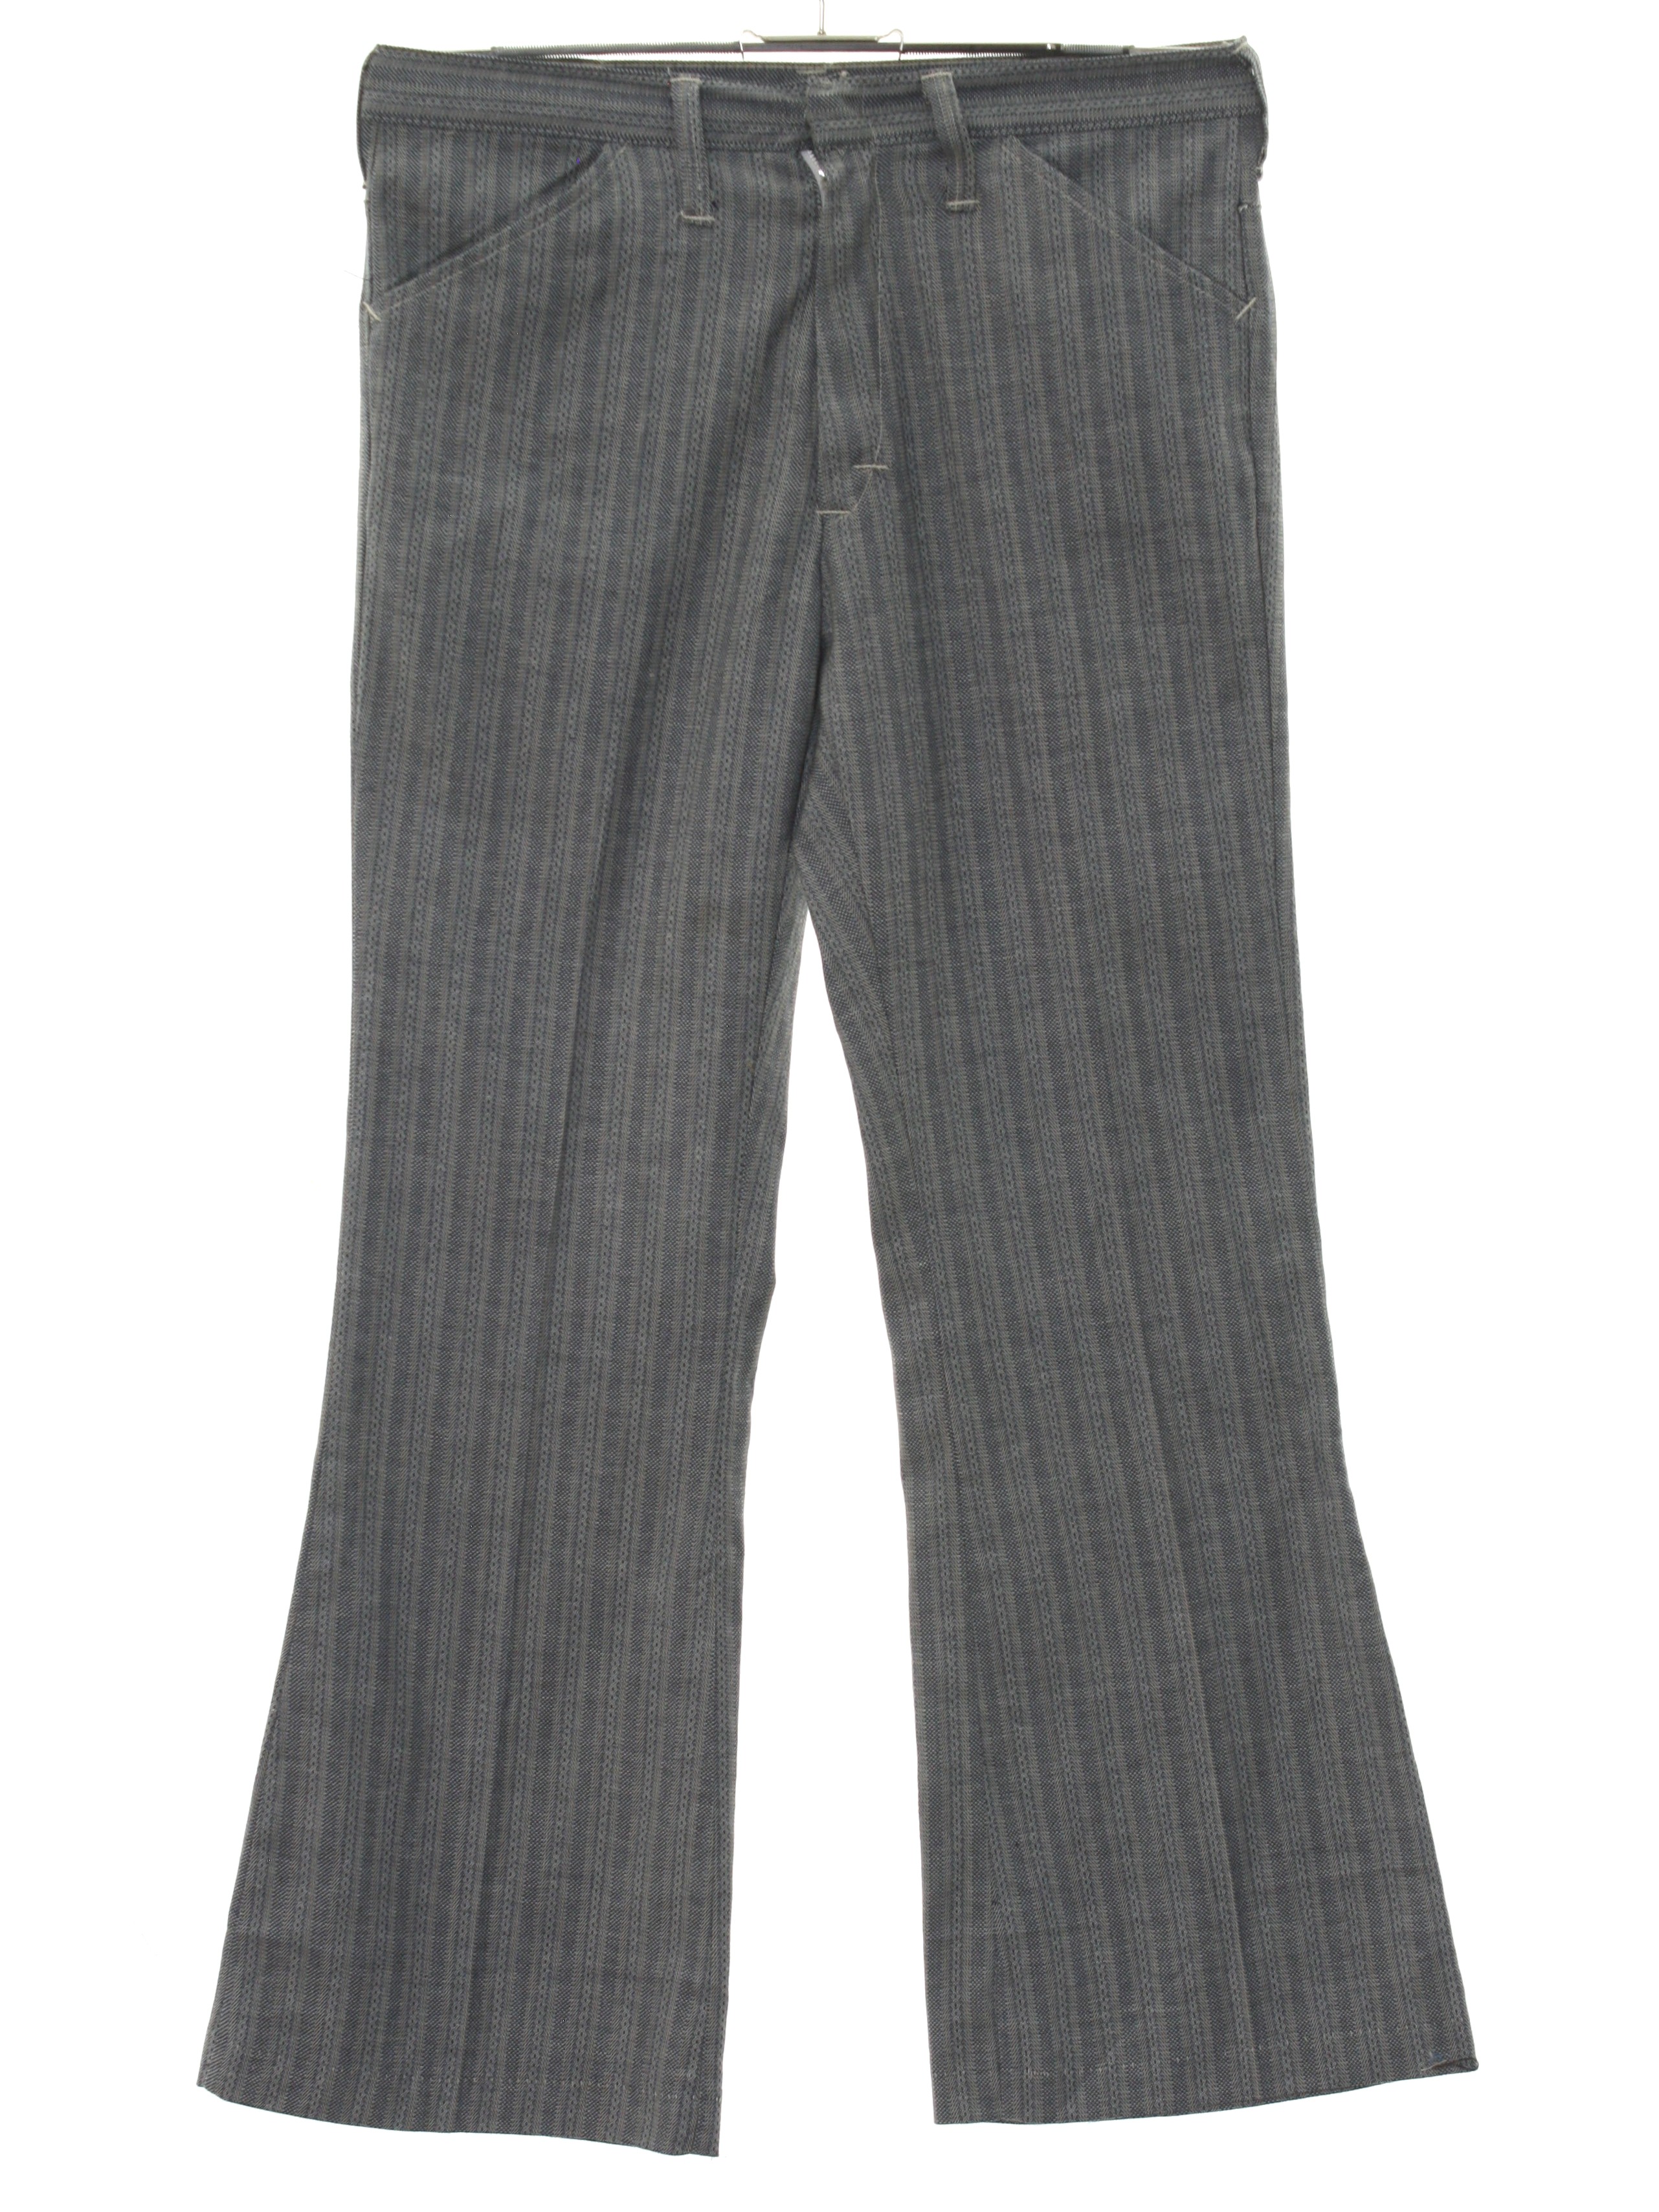 1960's Flared Pants / Flares (Missing Label): 60s -Missing Label- Mens ...